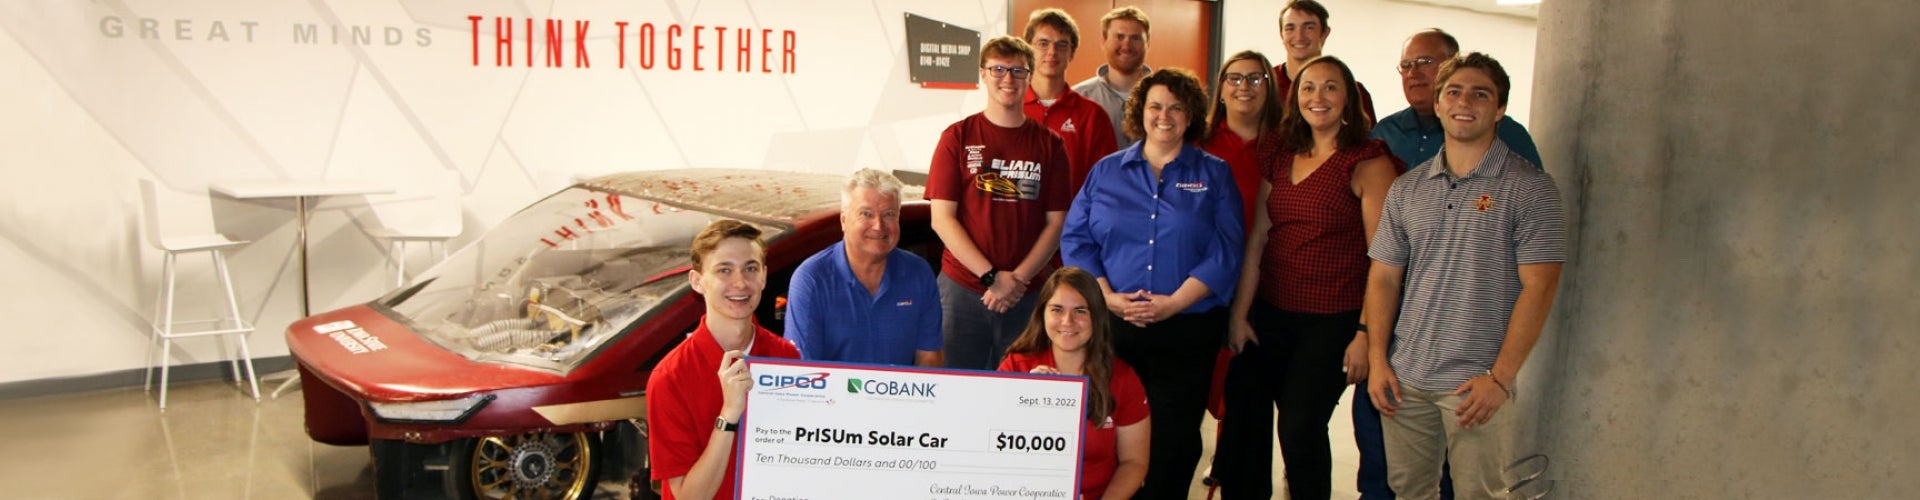 ISU Prisum Solar Car check donation